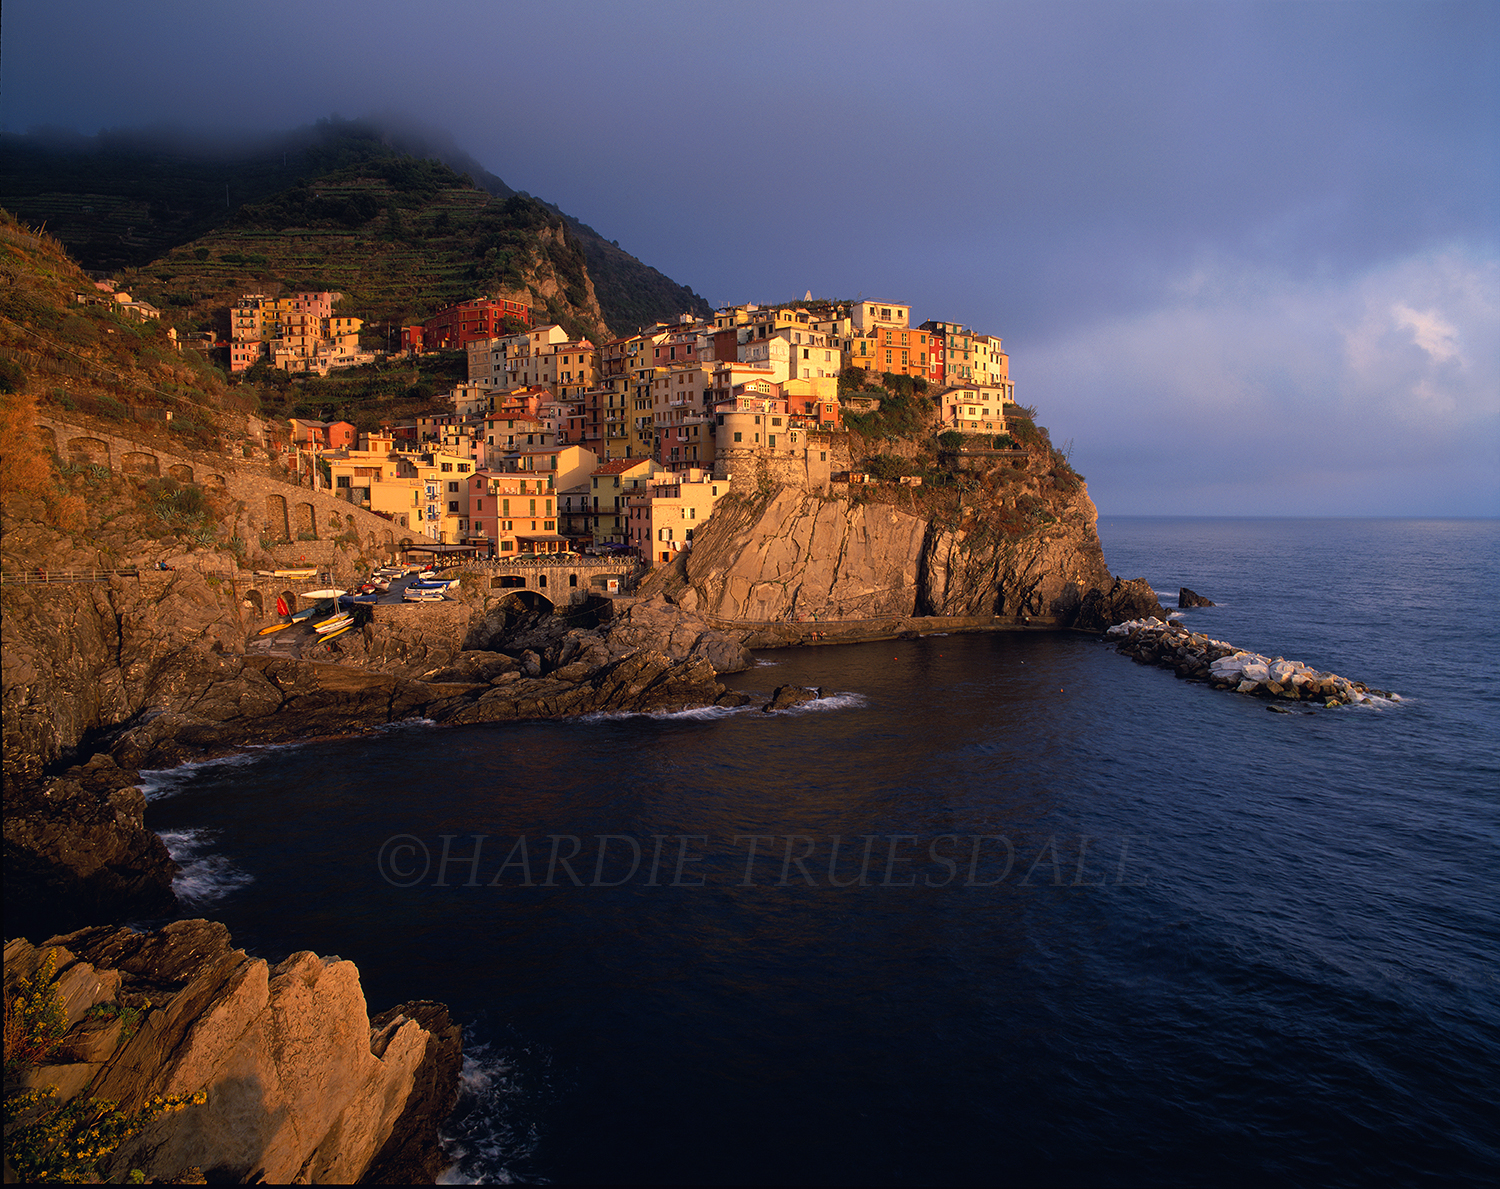  Ity#002 "Manarola Evening, Cinque Terre, Liguria, Italy" 